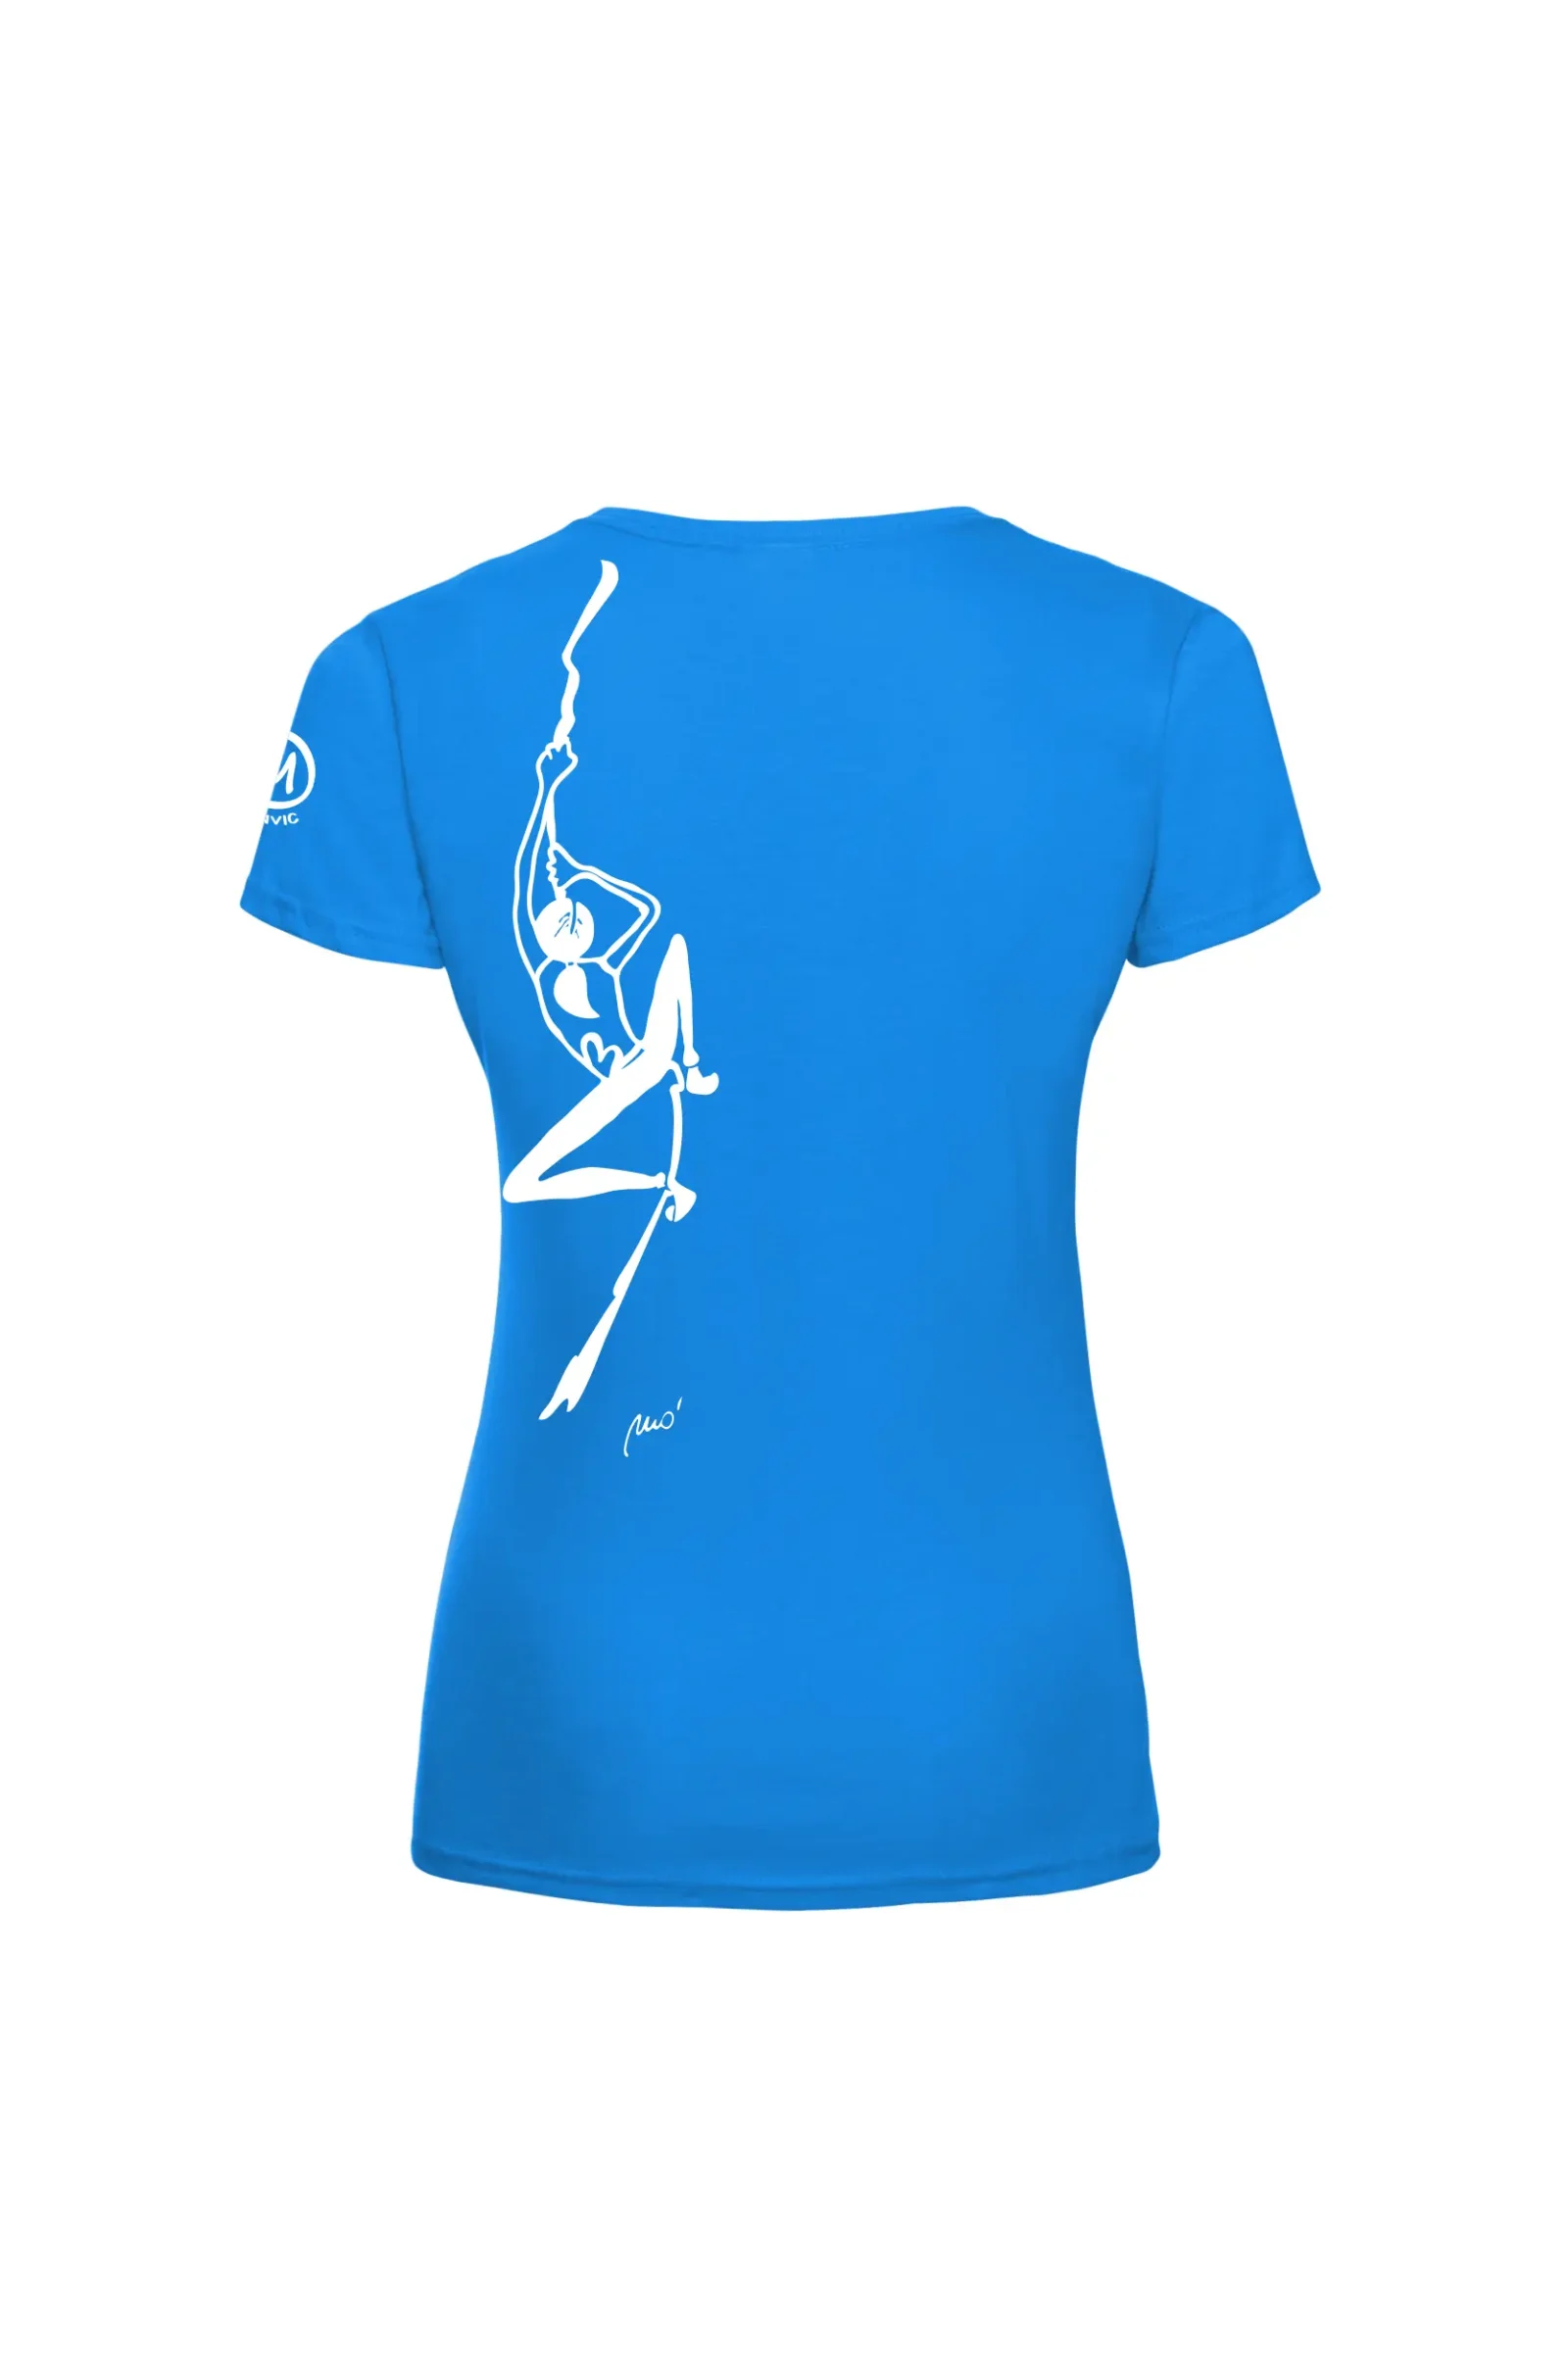 Women's climbing t-shirt - light blue cotton - "Sabry" graphic - SHARON by MONVIC